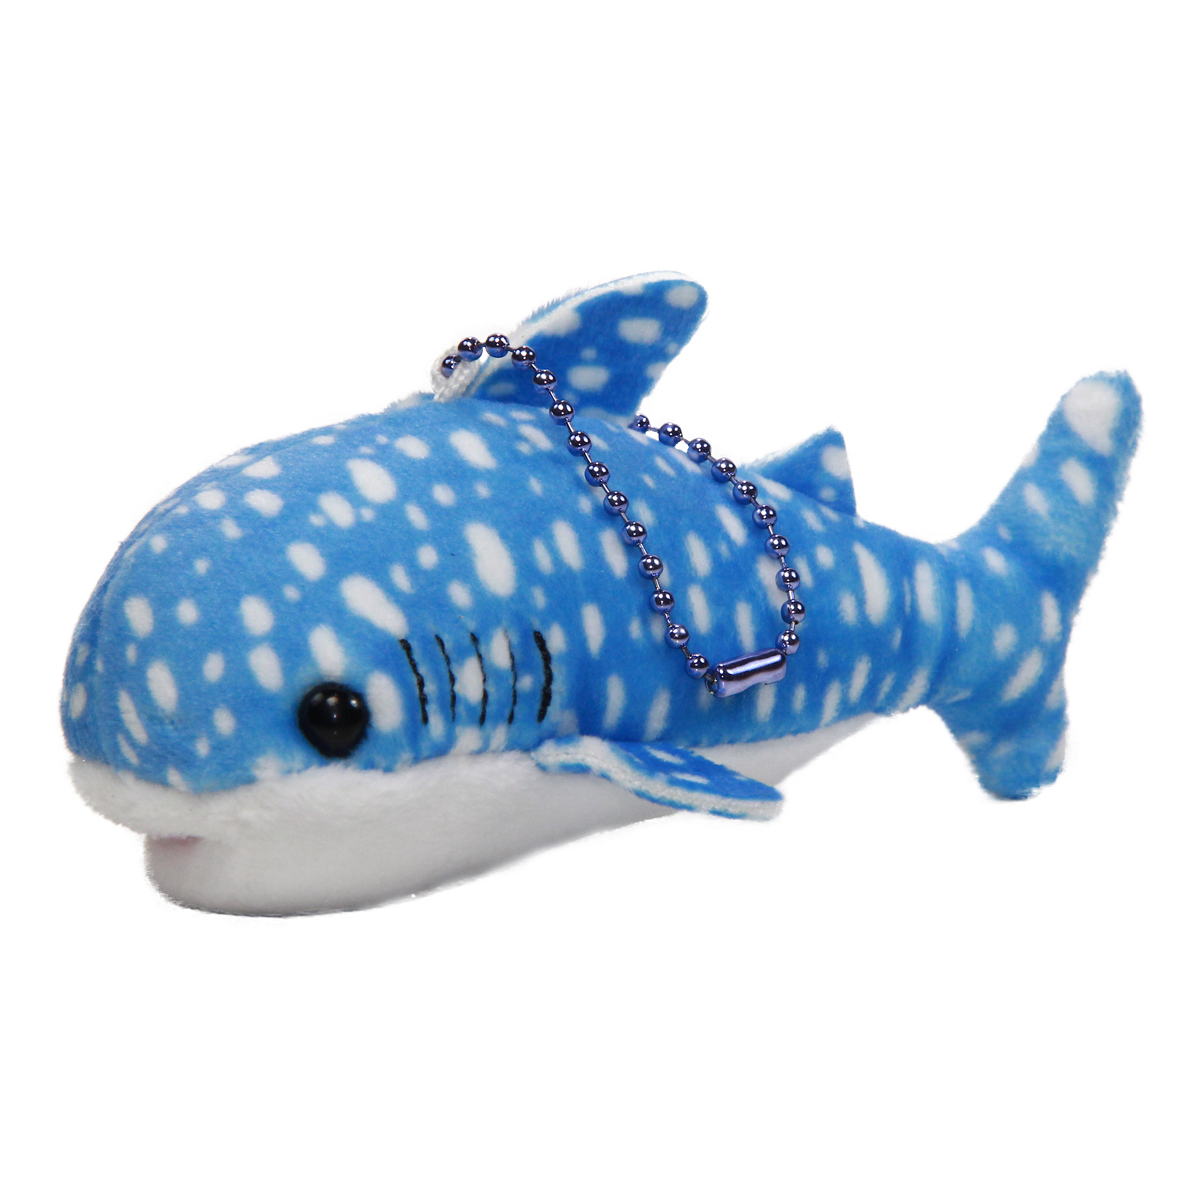 Aquarium Collection Plush Whale Shark Plush Toy Blue White Dot Keychain 4 Inches